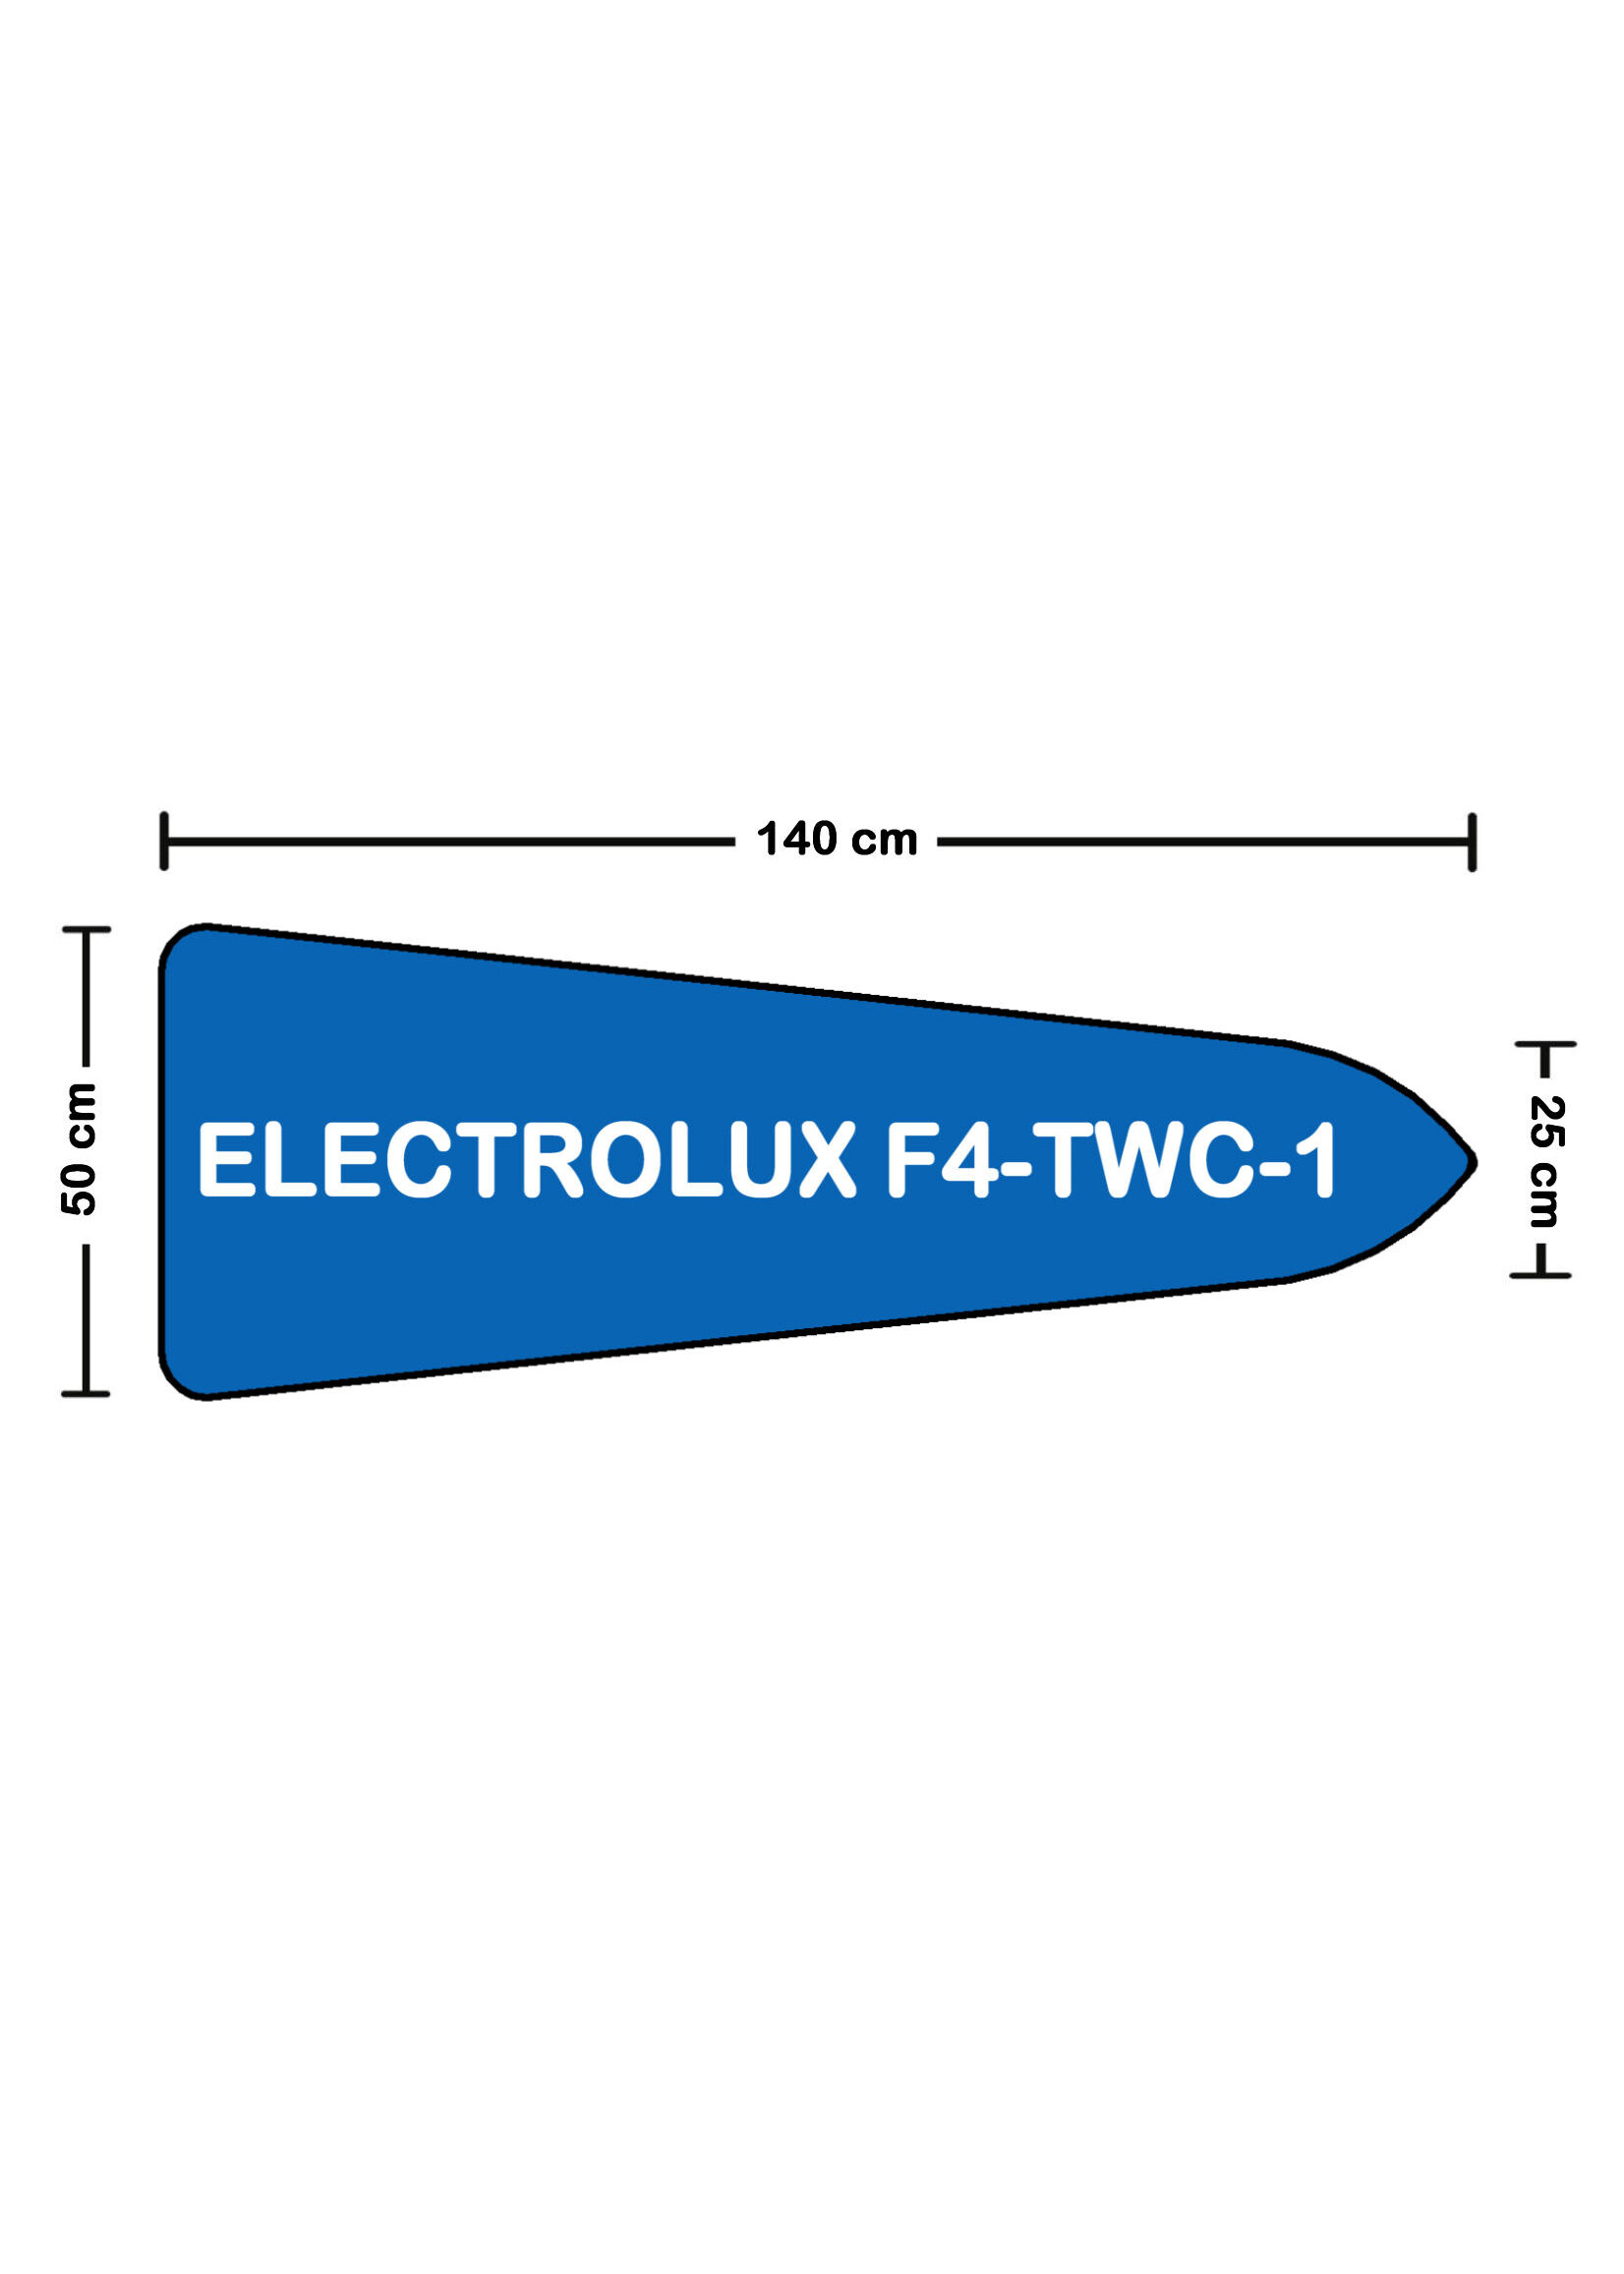 Solana Housse pour ELECTROLUX F4-TWC-1